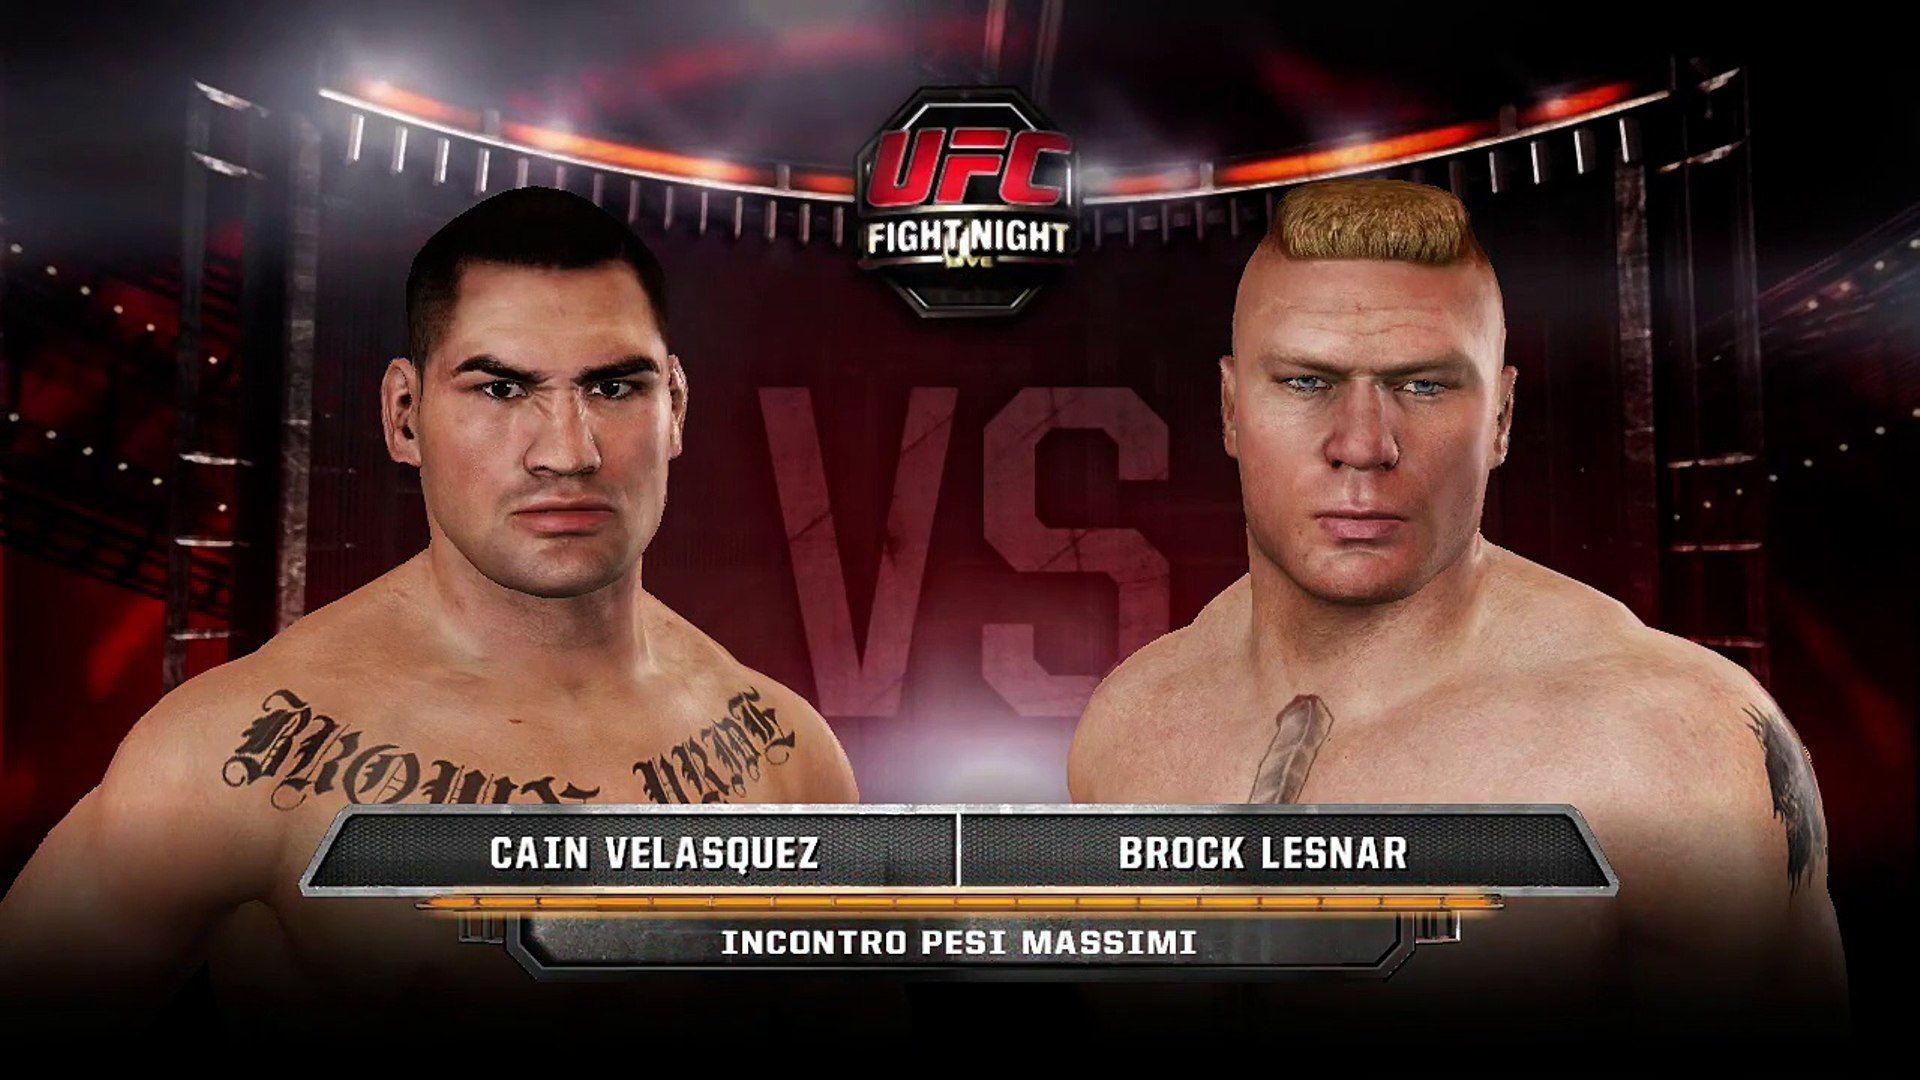 UFC Cain Velasquez vs Brock Lesnar